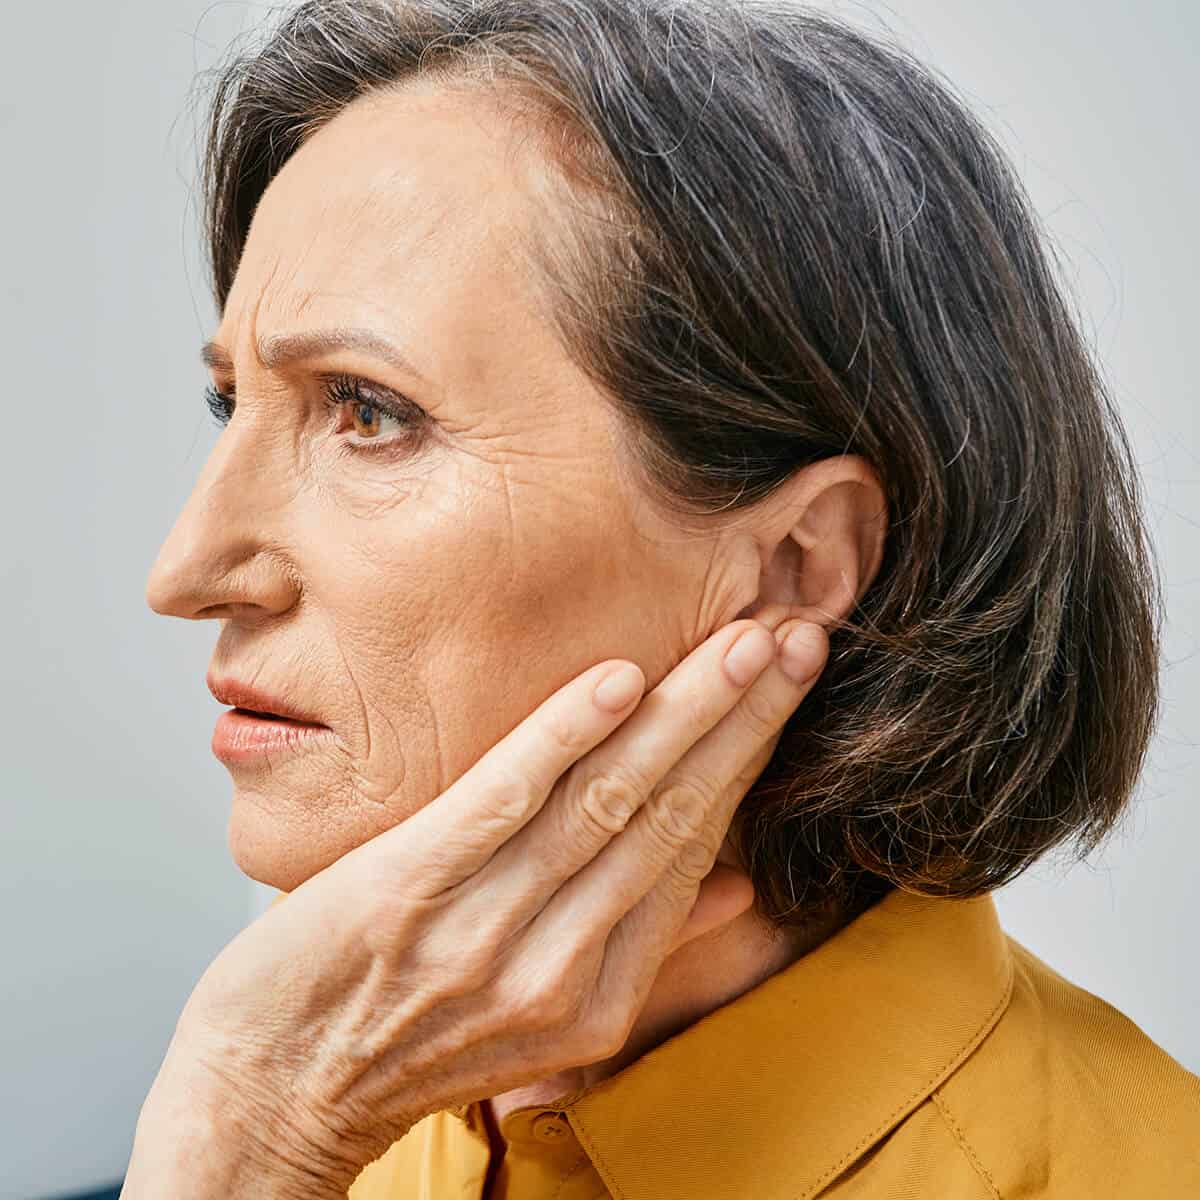 Woman holding ear